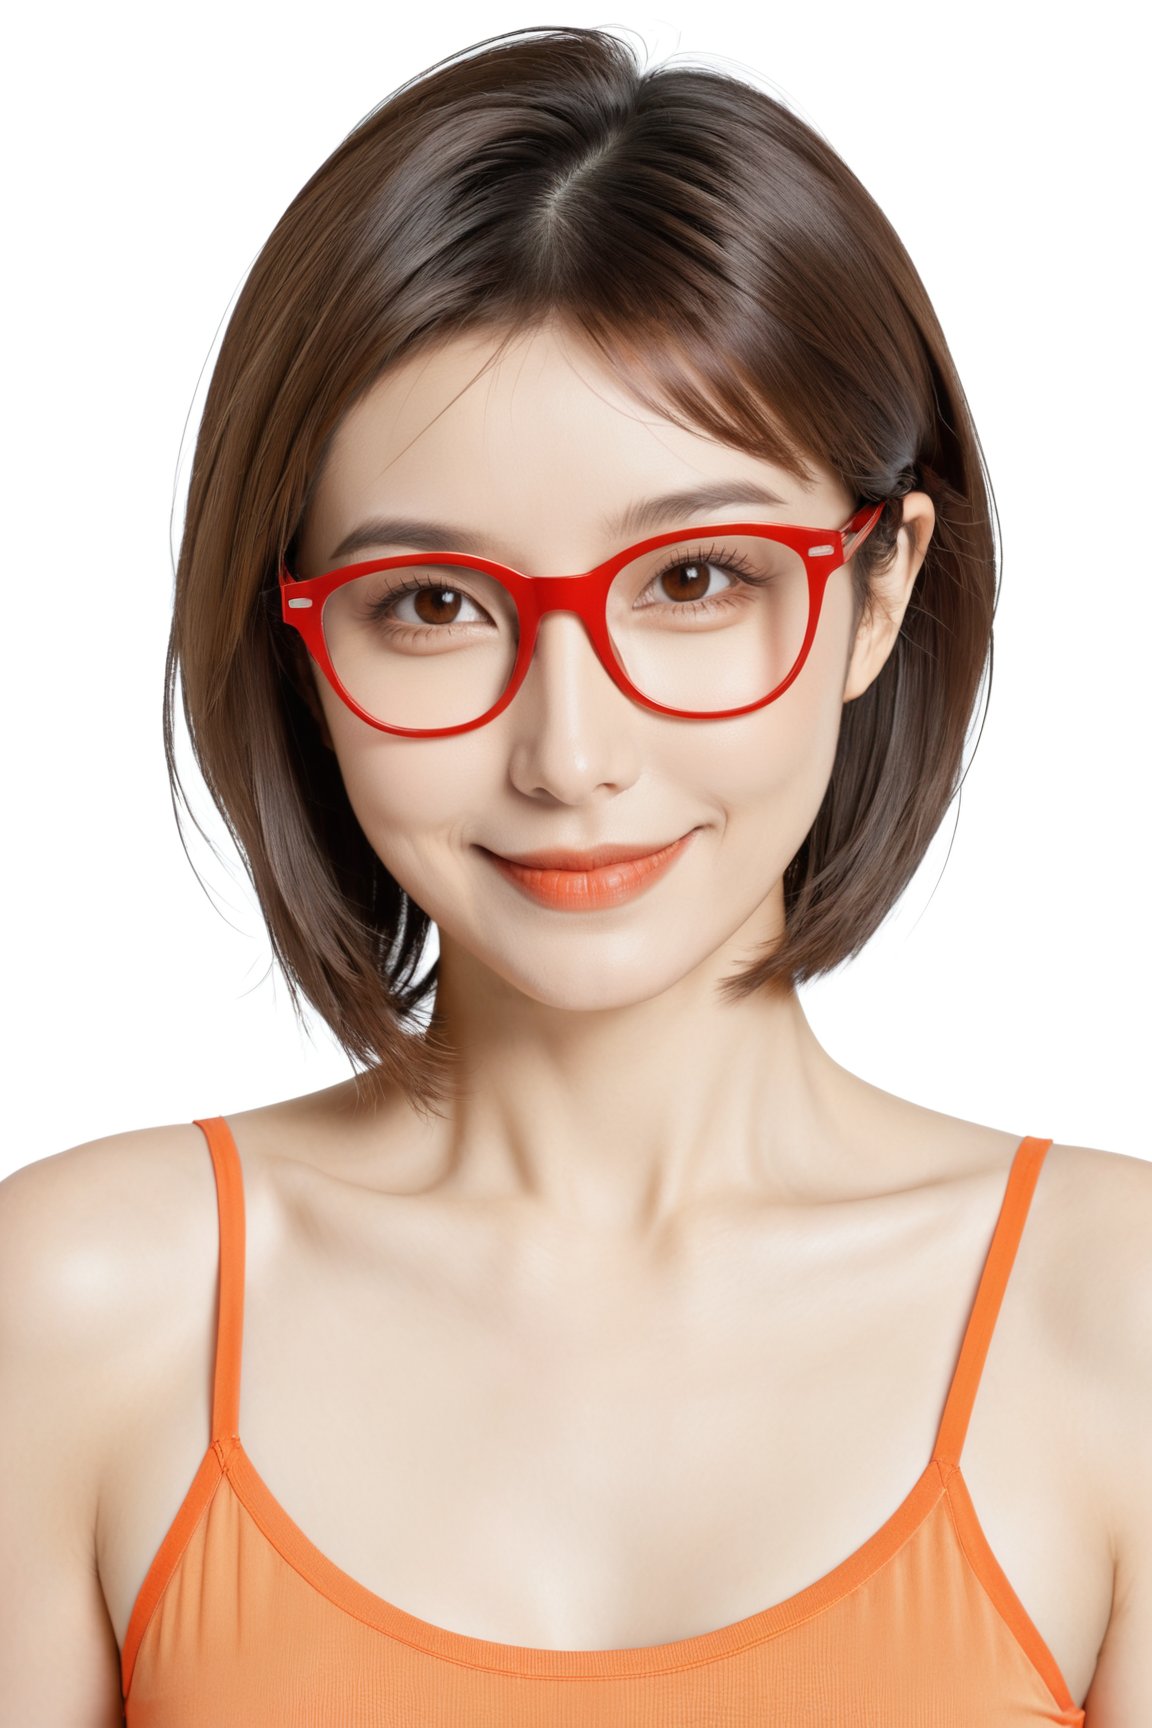 woman, bob haircut, brown hair, red glasses, smile, collarbone, (orange tank top), medium shot, shiny skin, (white background)